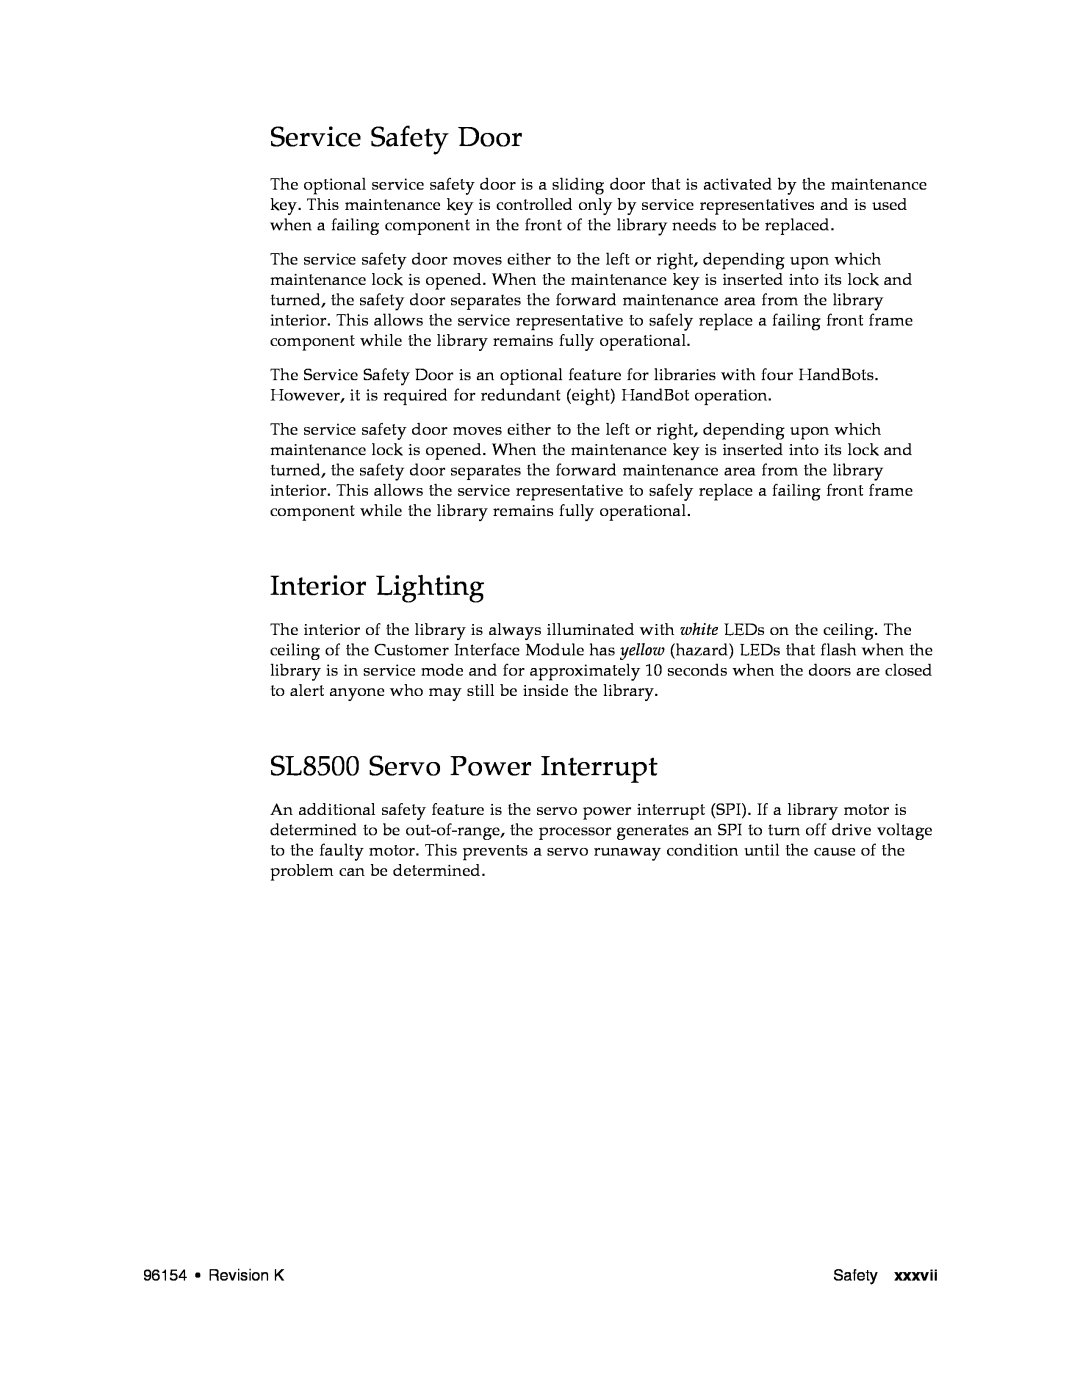 Sun Microsystems manual Service Safety Door, Interior Lighting, SL8500 Servo Power Interrupt, Revision K 